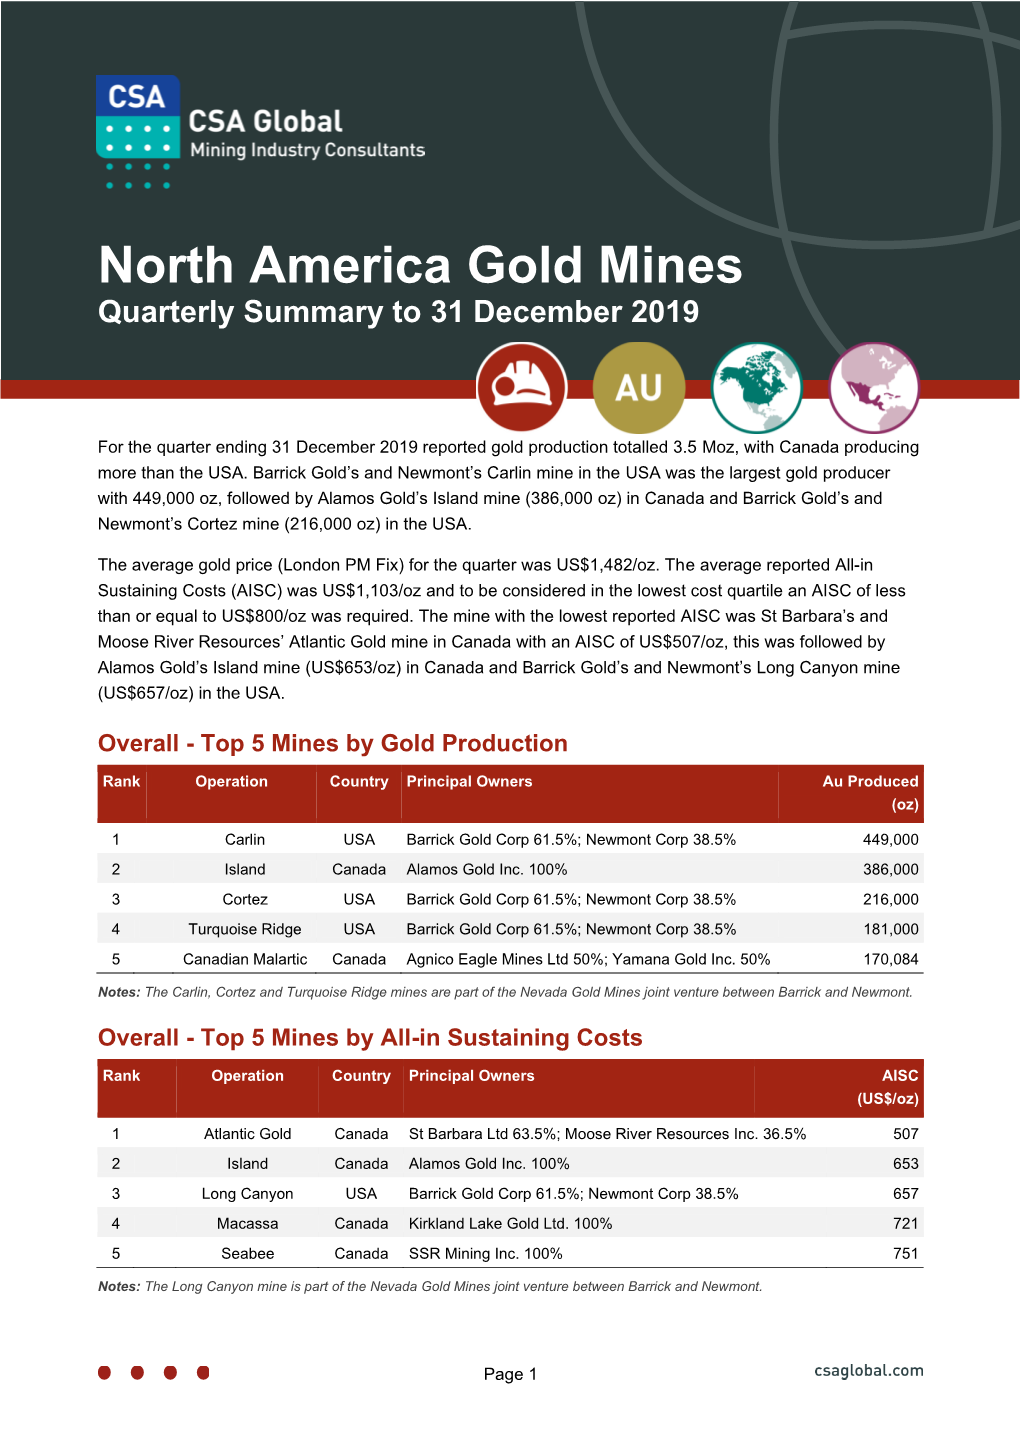 North America Gold Mines Quarterly Summary to 31 December 2019